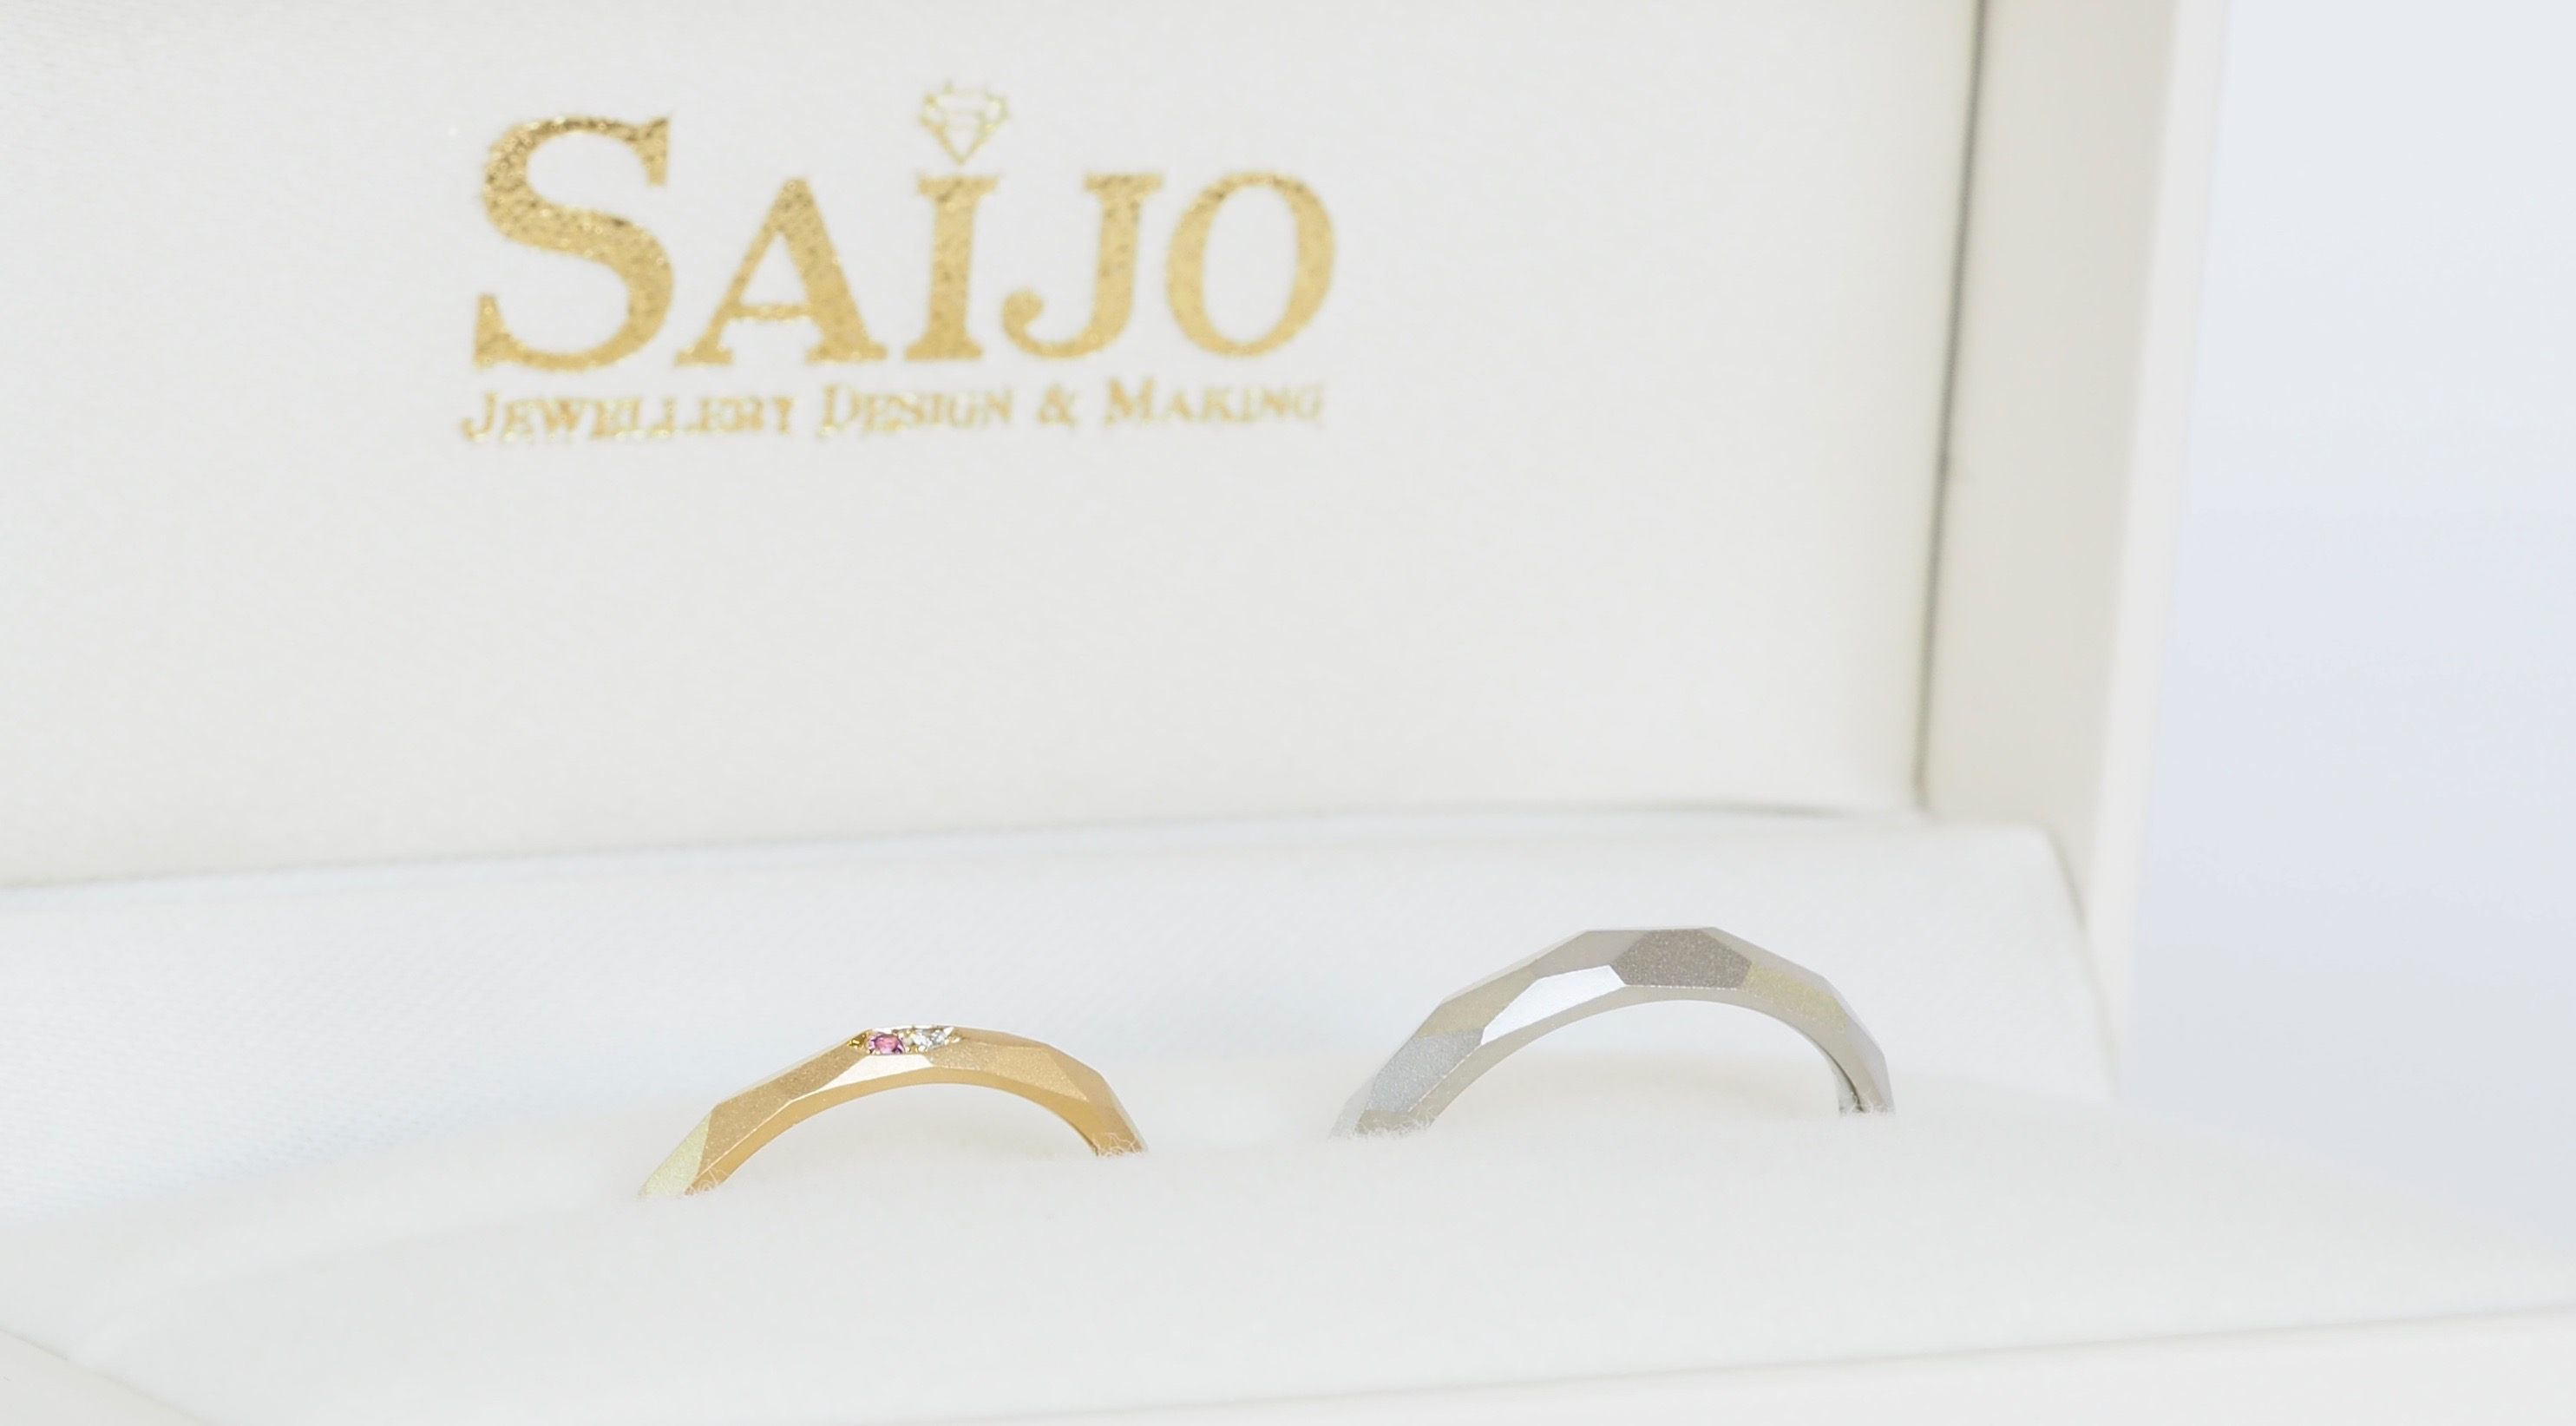 SAIJOで作られたオーダーメイドの結婚指輪｜SAIJO｜京都 宇治｜オーダーメイドジュエリー